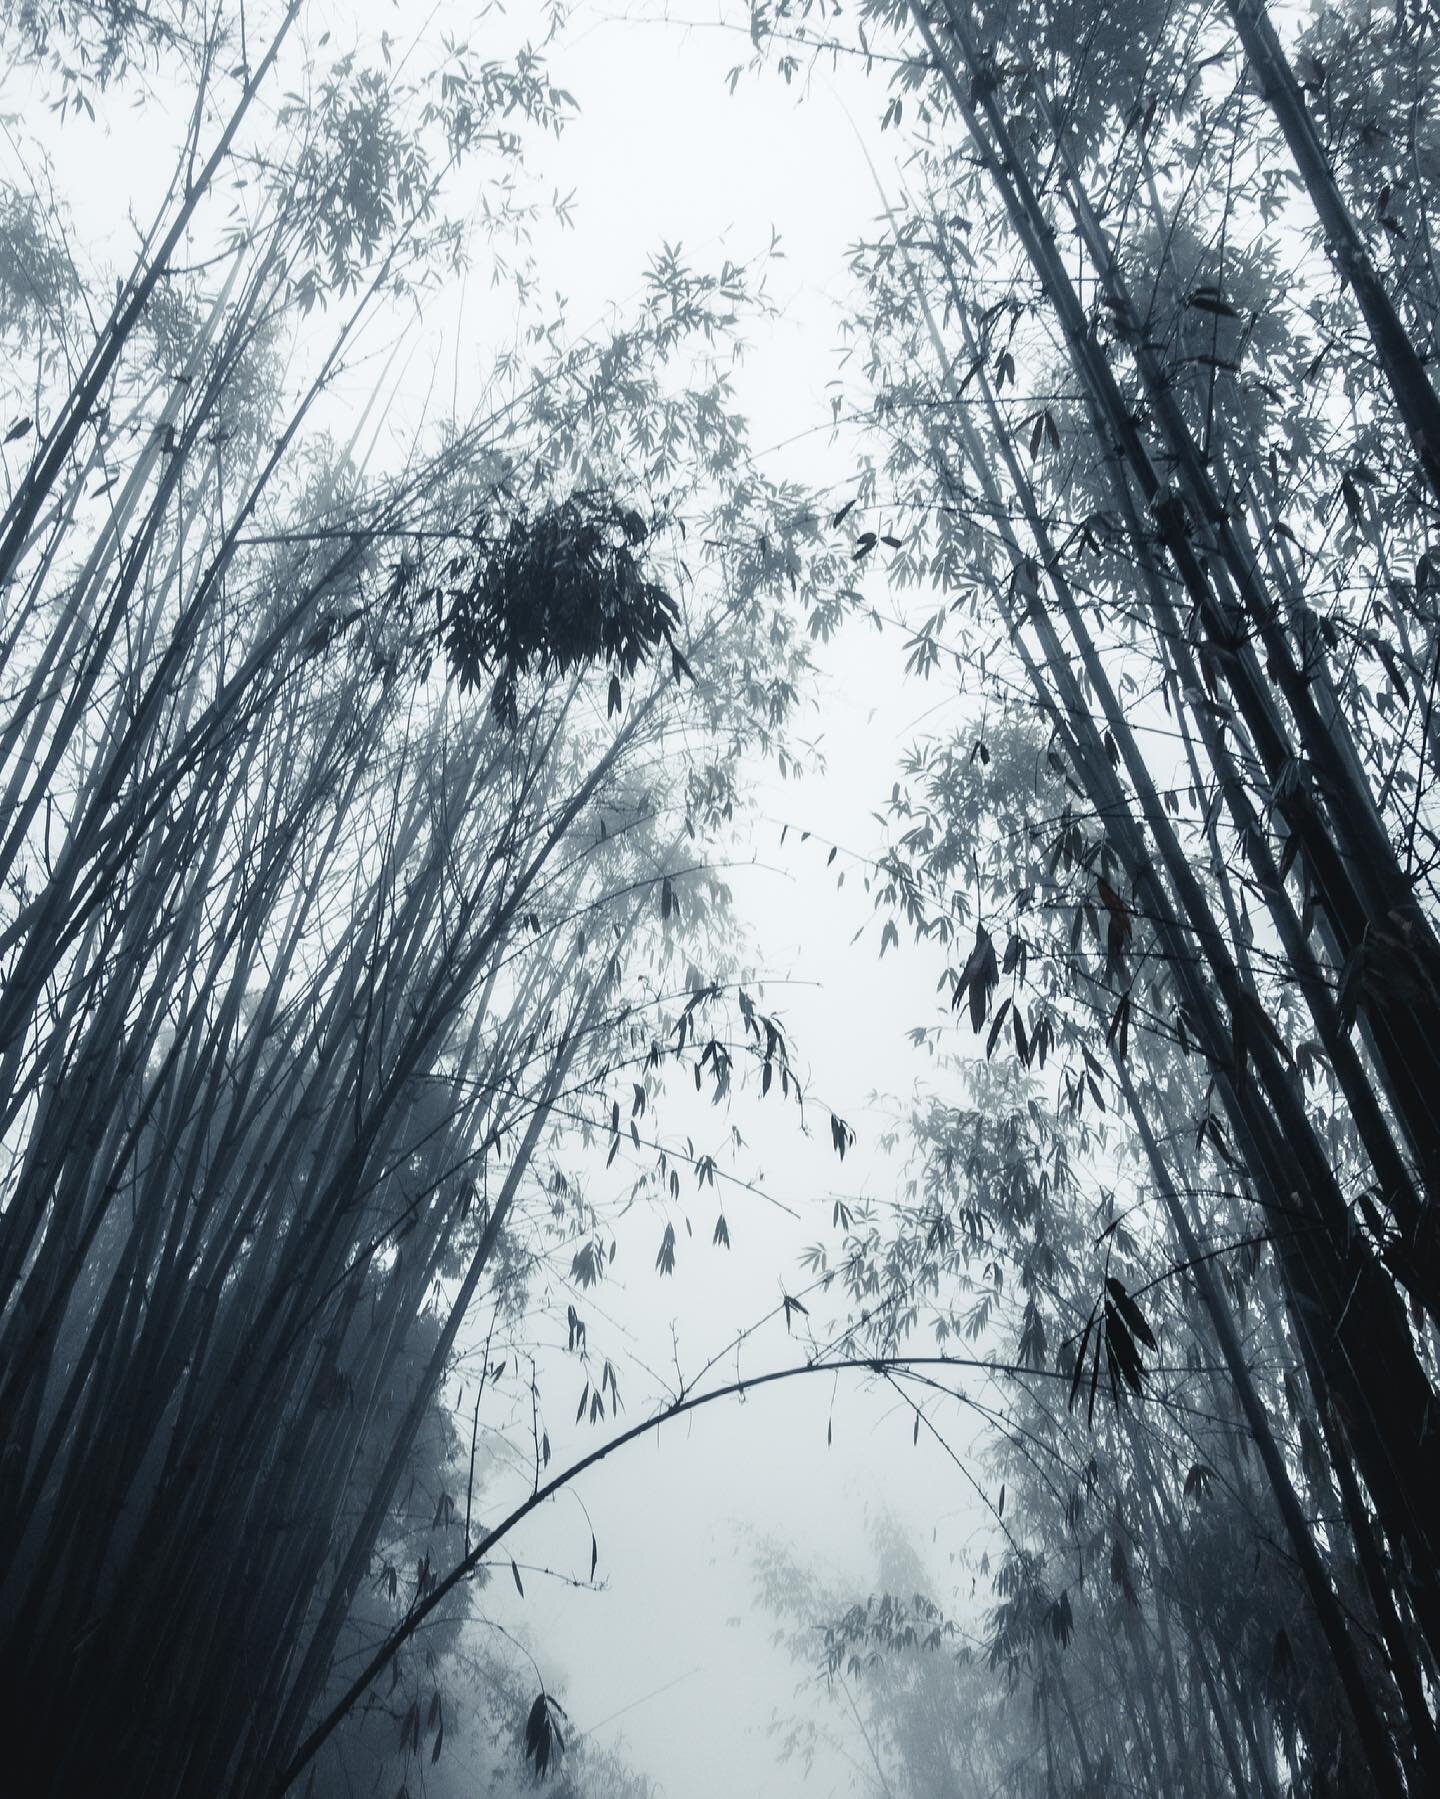 New old edits III: Bamboo-zles in the Mist🎋
.
.
.
Sa Pa, Lao Cai, Vietnam 🇻🇳 2016
.
.
#vietnam #sapavietnam #bambooforest #mist #tallbois #walkofalifetime #travelgram #sony #sonyrx100 #sonyrx100m3 #ourguidewasthebest #coldaf